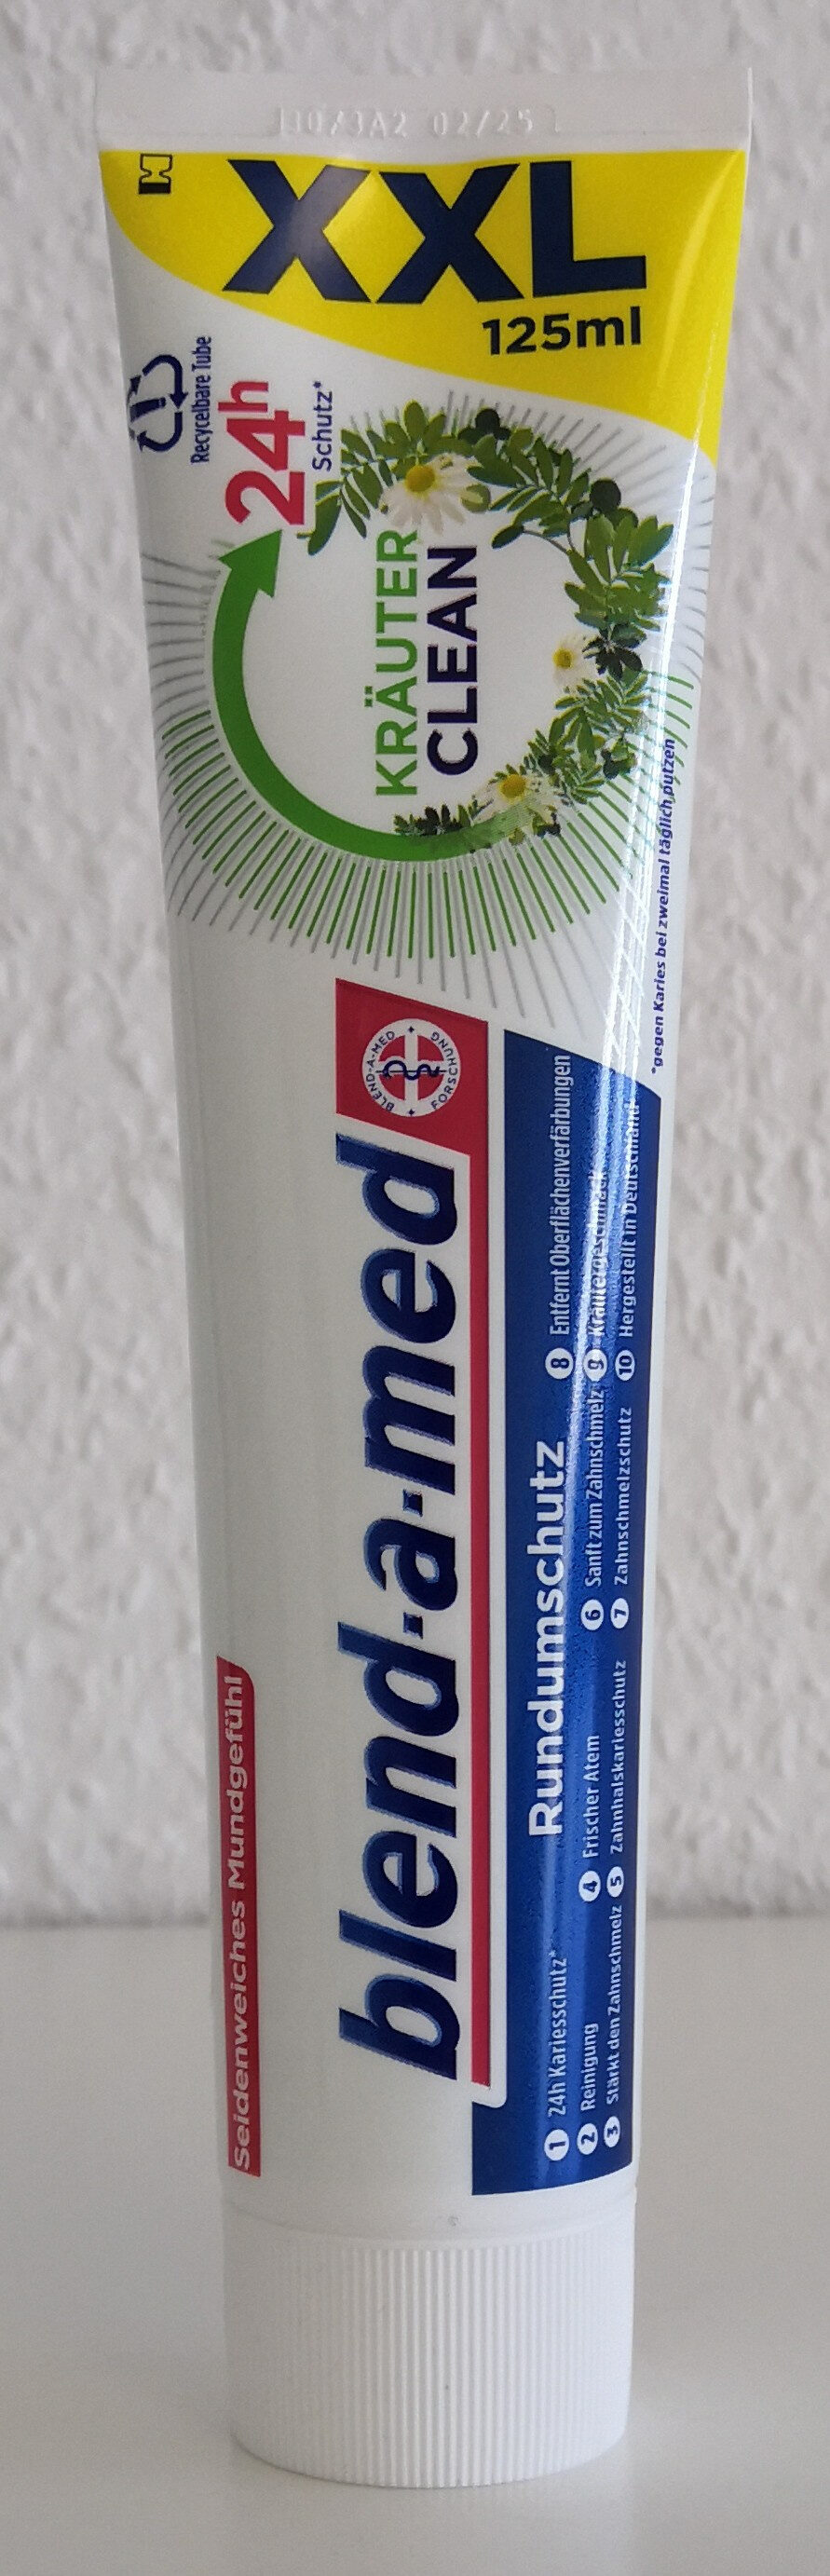 blend-a-med Kräuter clean - מוצר - de